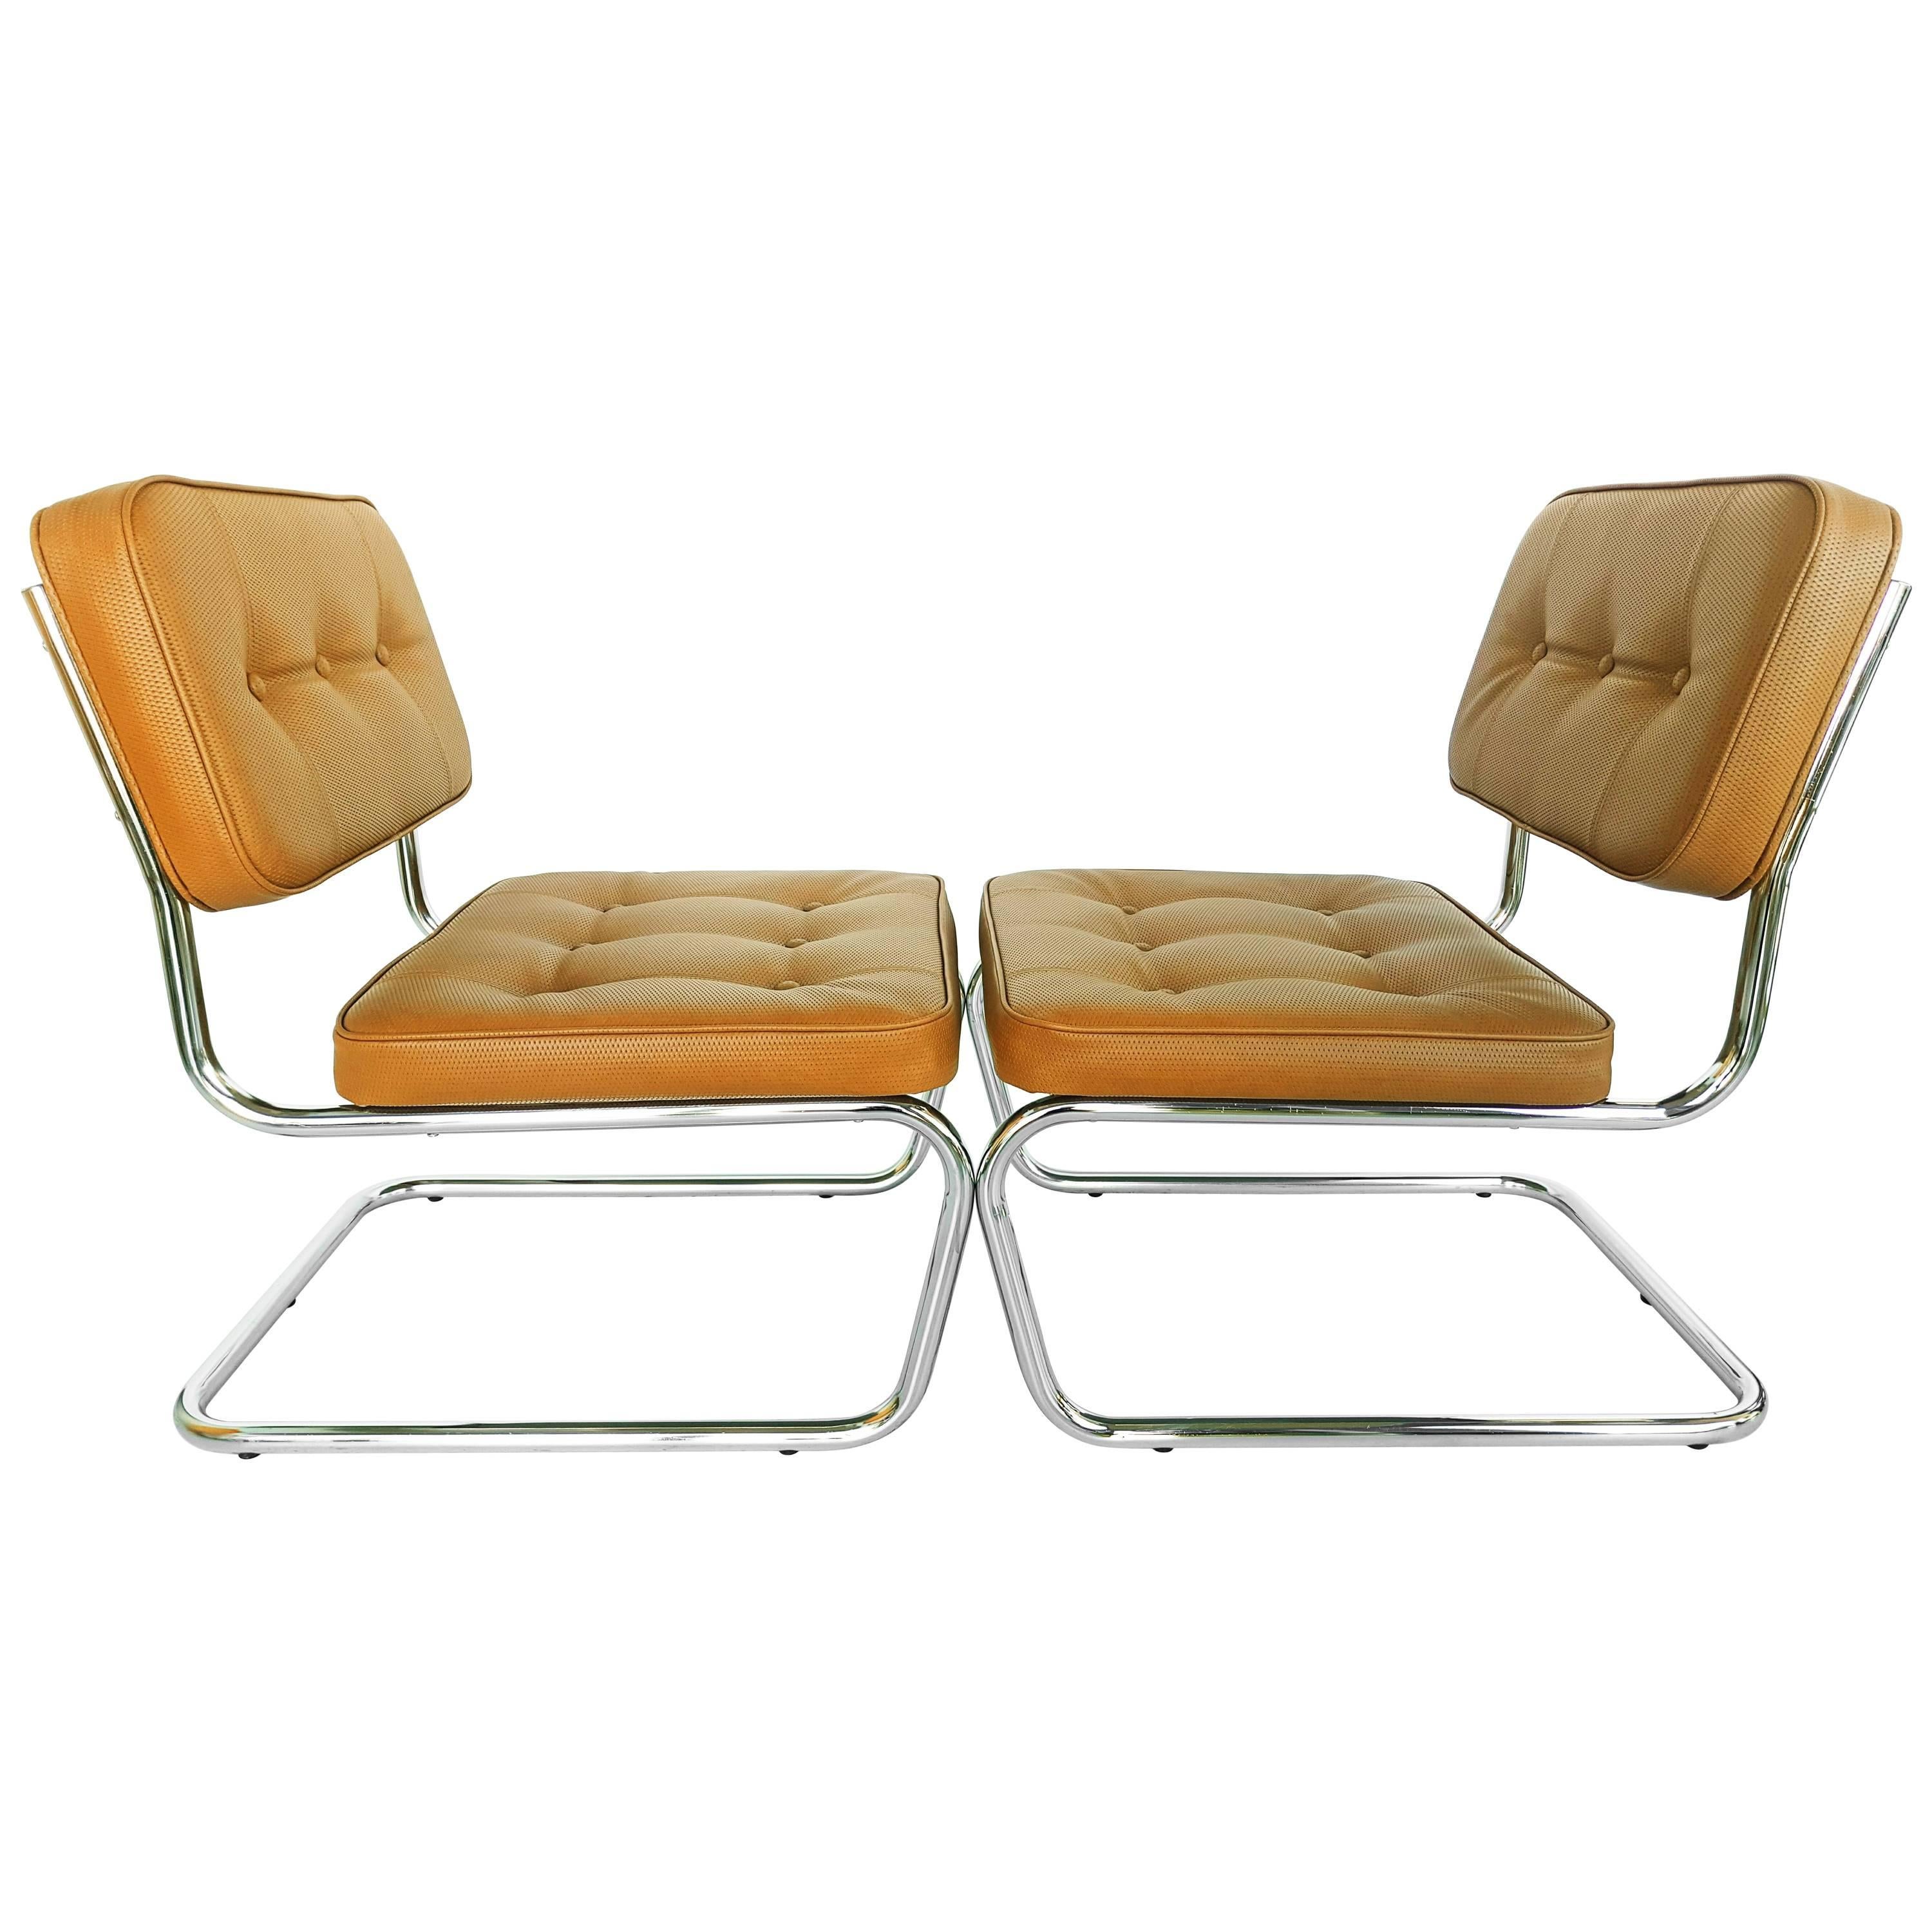 Pair of Tan Mb-Tex Lounge Chairs, circa 1970